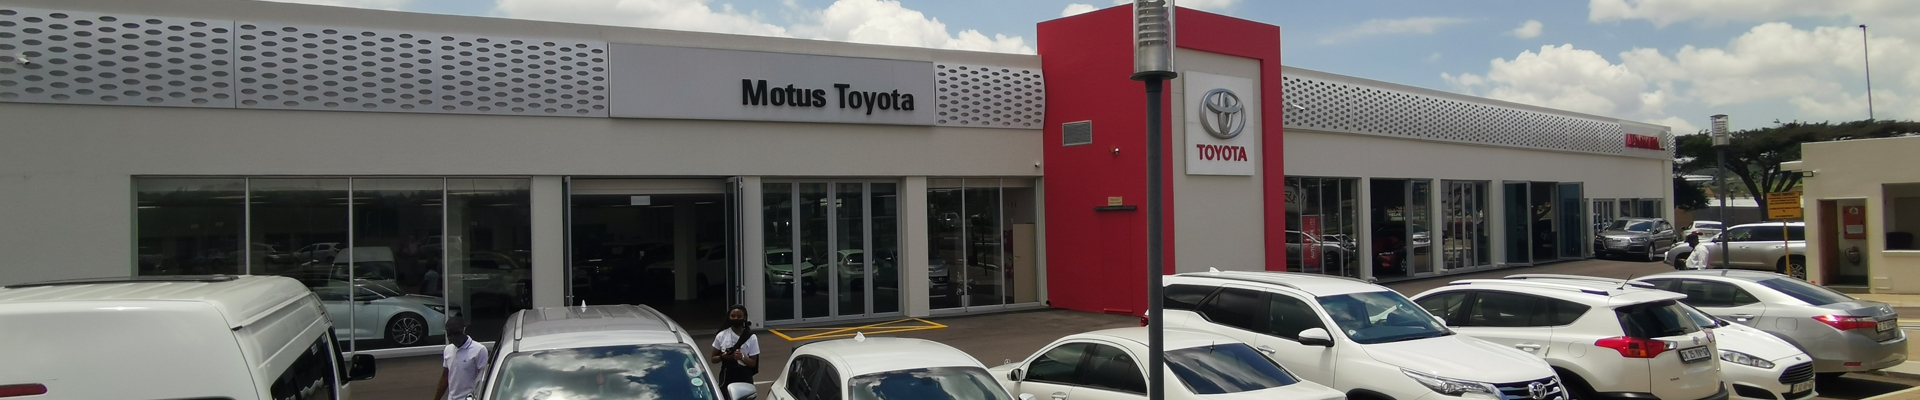 Motus Toyota Bedfordview dealer image1